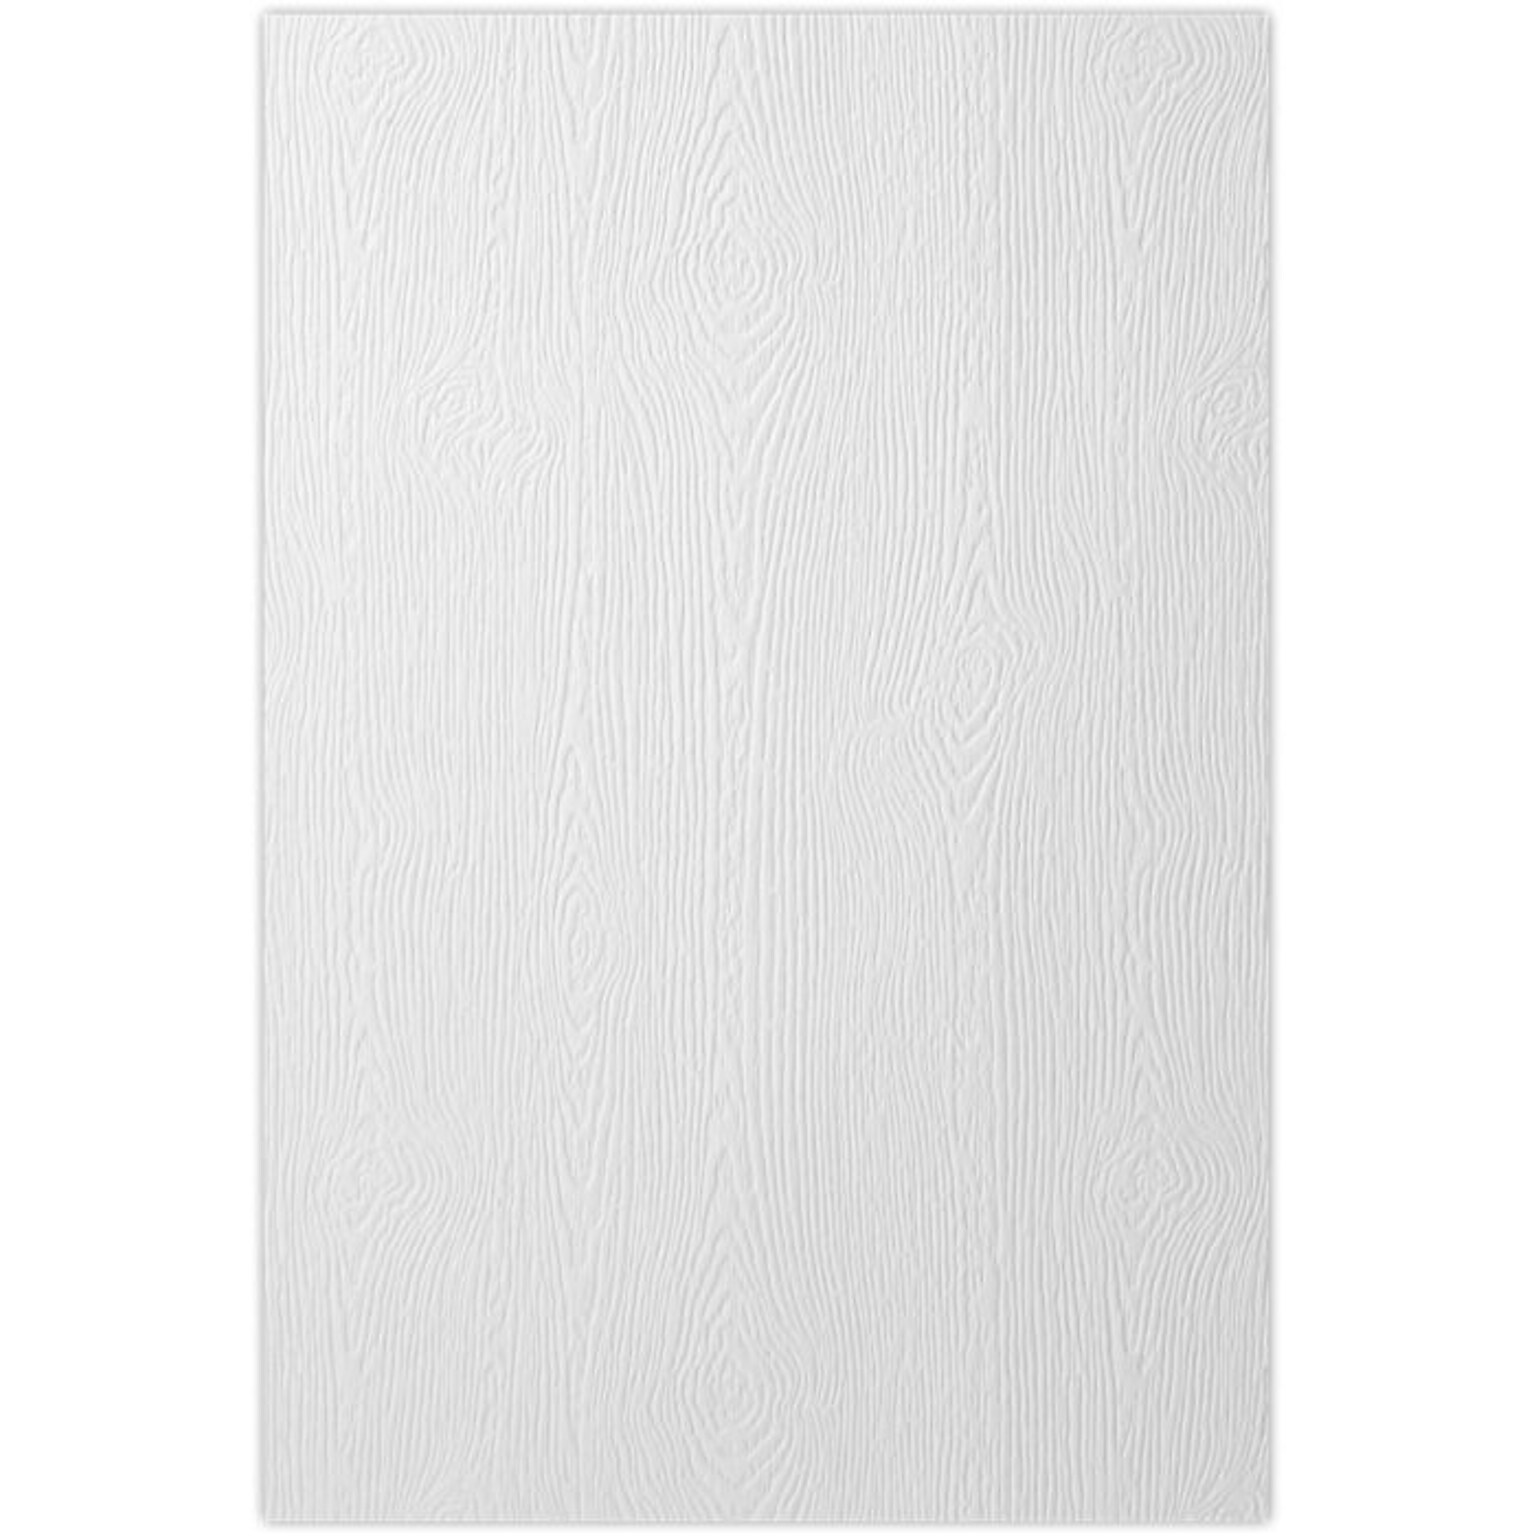 LUX Woodgrain 12 x 18 Specialty Paper, 67 lbs., 50 Brightness, White Birch Woodgrain, 50 Sheets/Ream, /Pack (1218-P-S02-50)